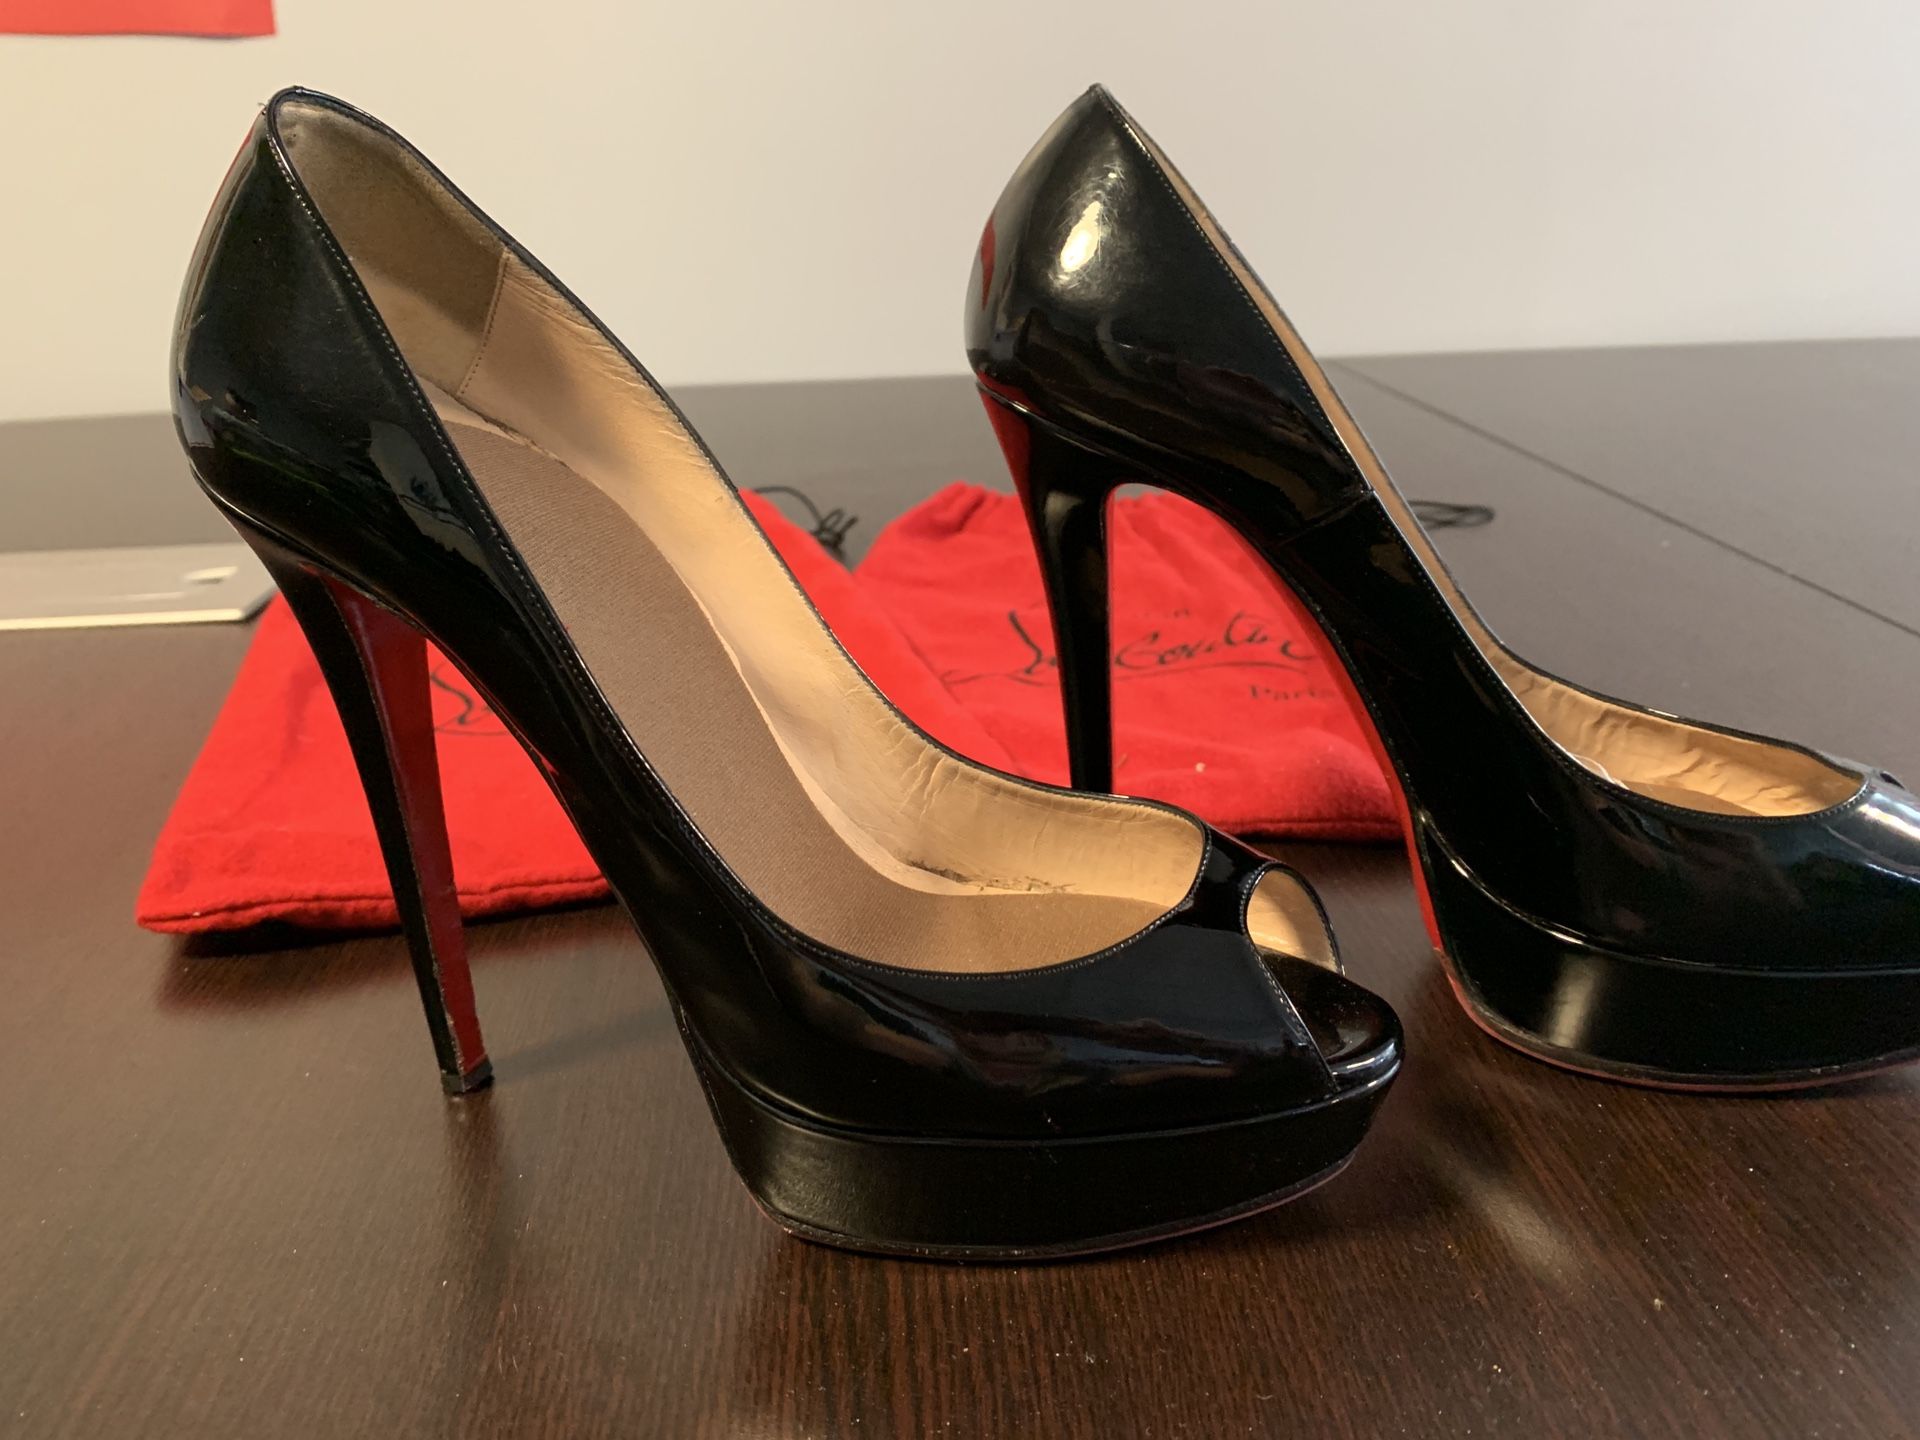 Louboutin heels size 39 or 8.5 US.